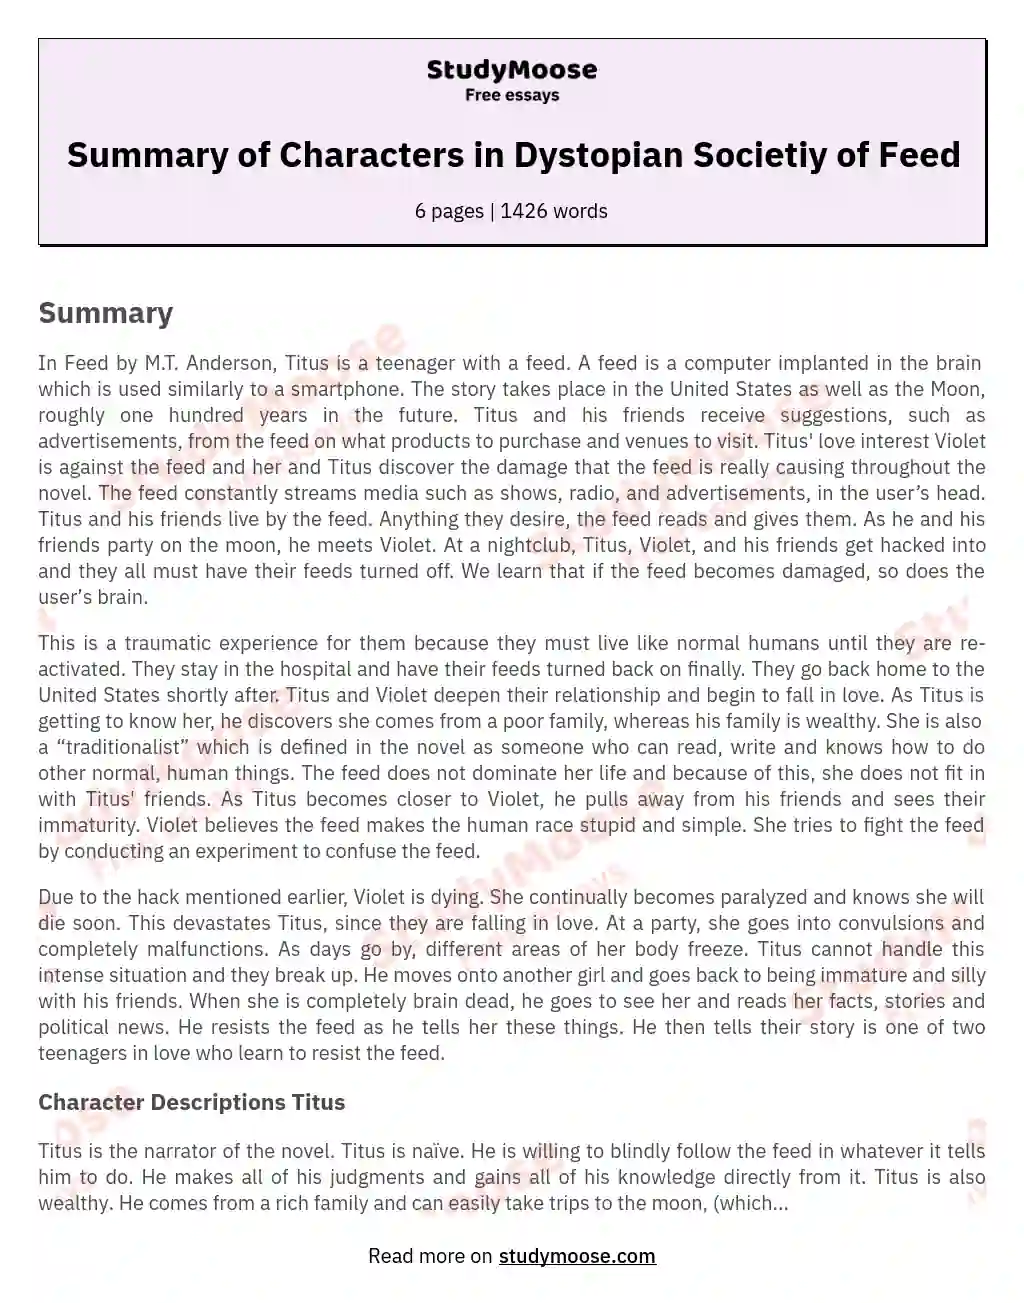 Summary of Characters in Dystopian Societiy of Feed